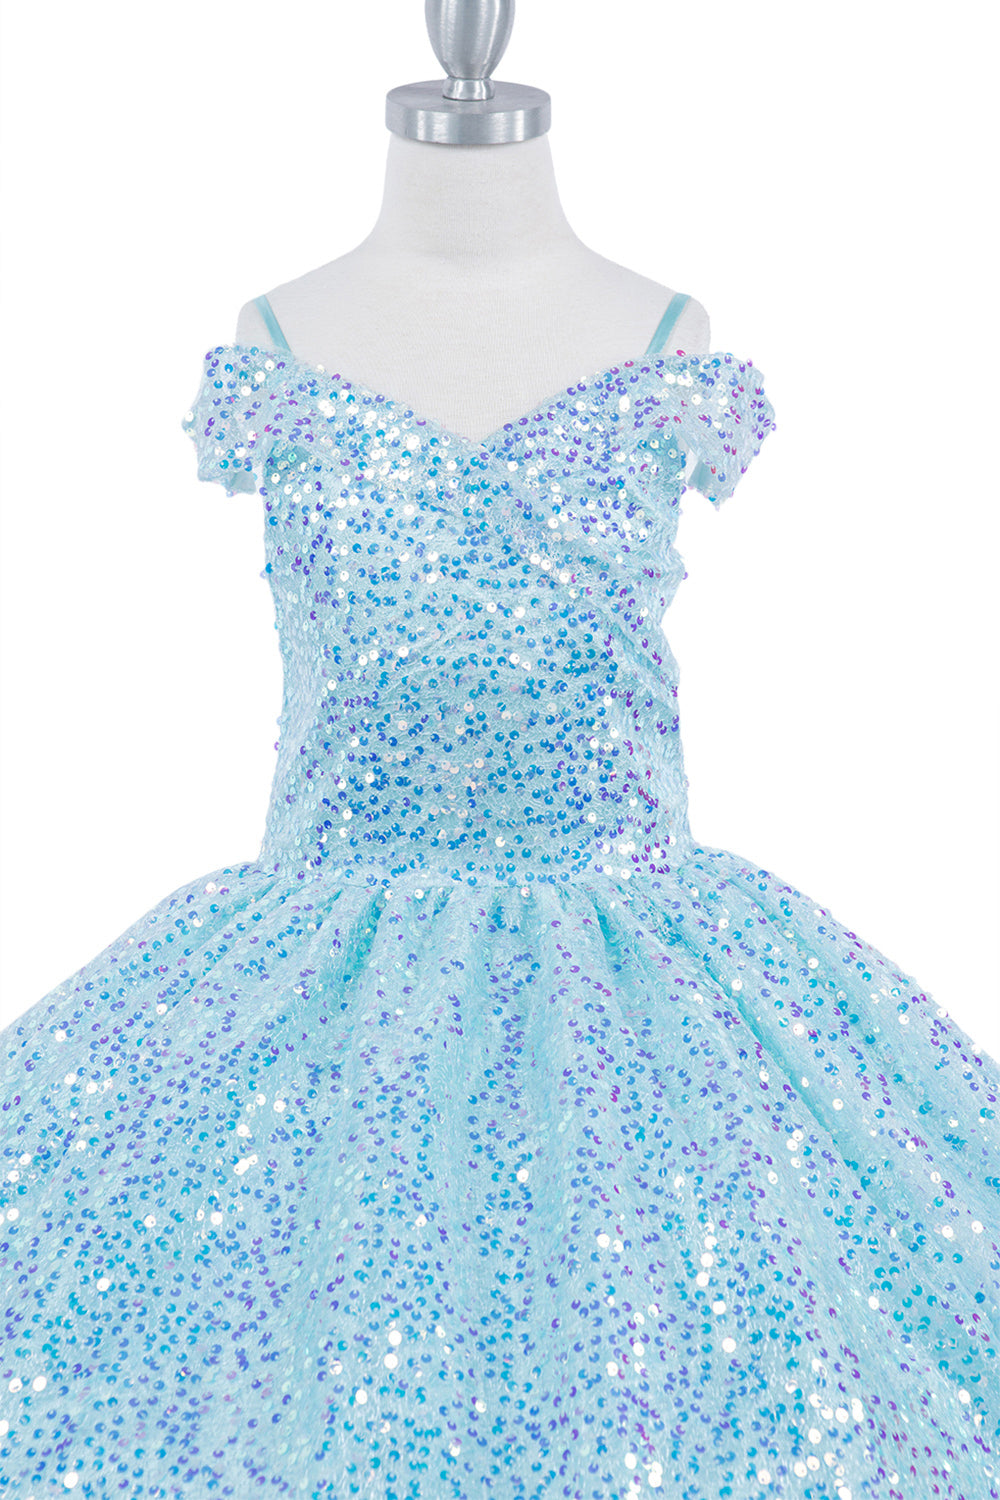 Cinderella Couture USA AS5123 Sequin Sweetheart Neckline Mini Quince